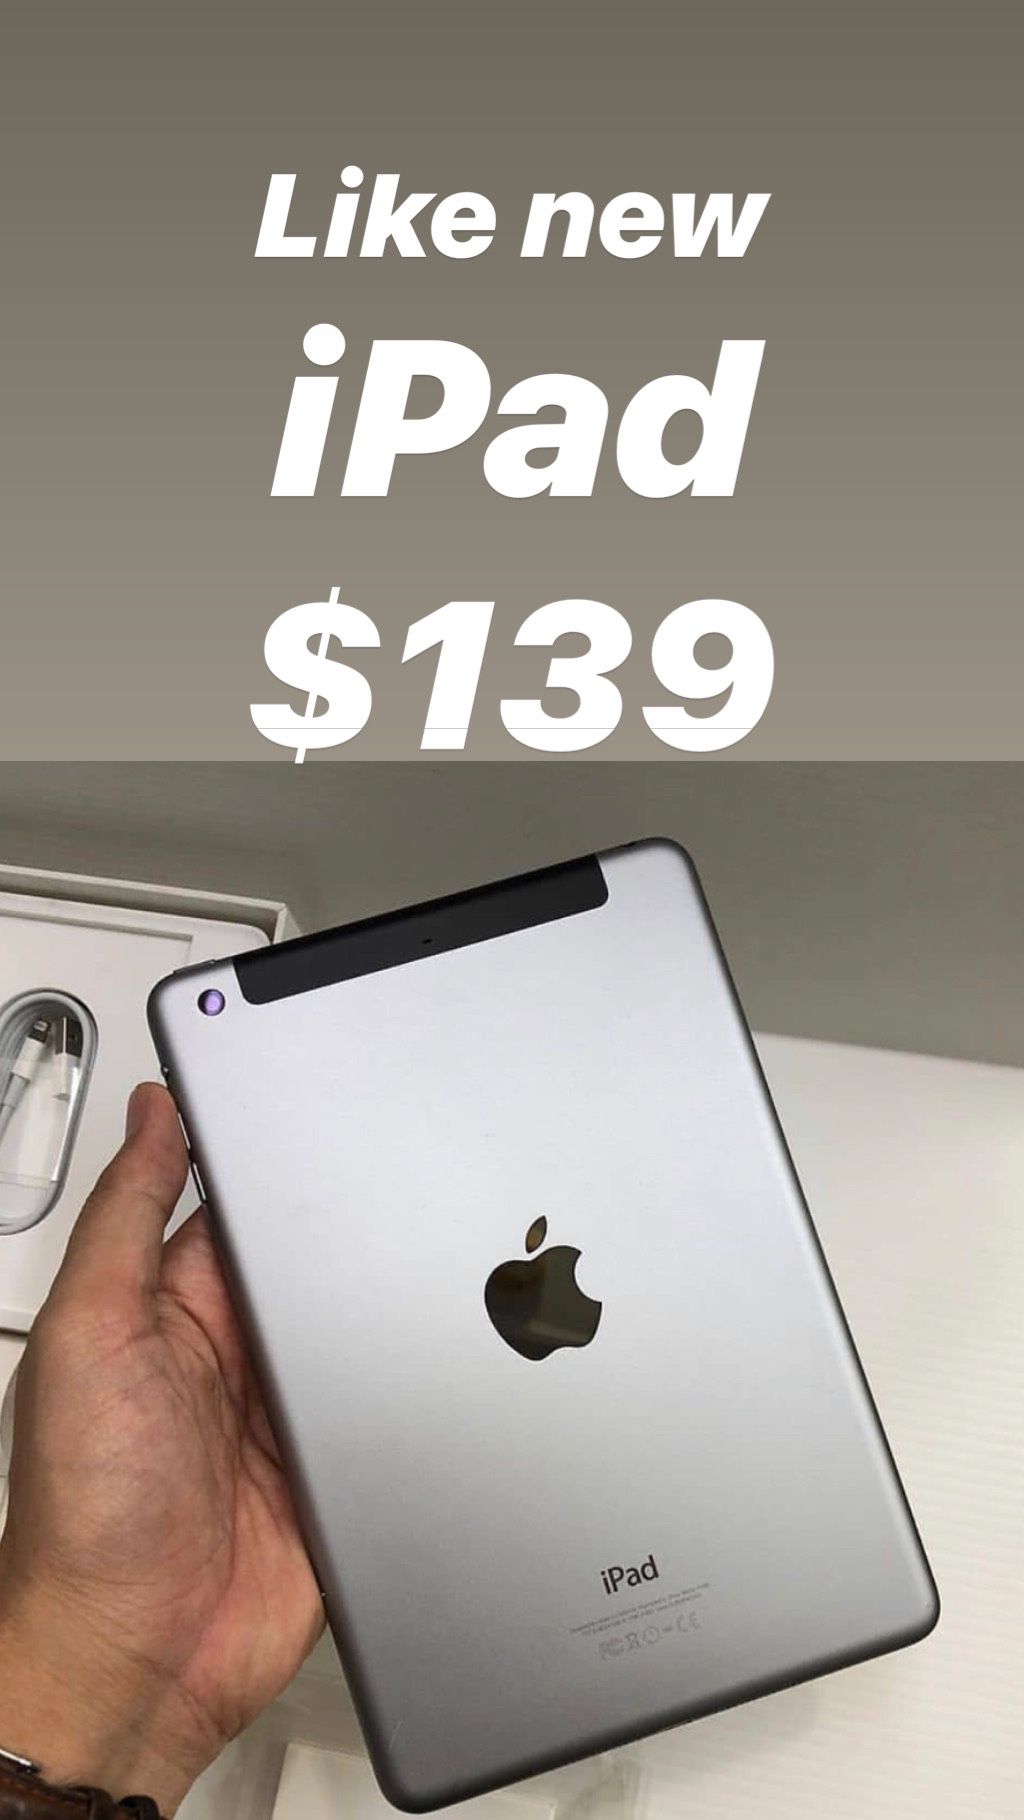 Like new iPad 4 generation WiFi $139